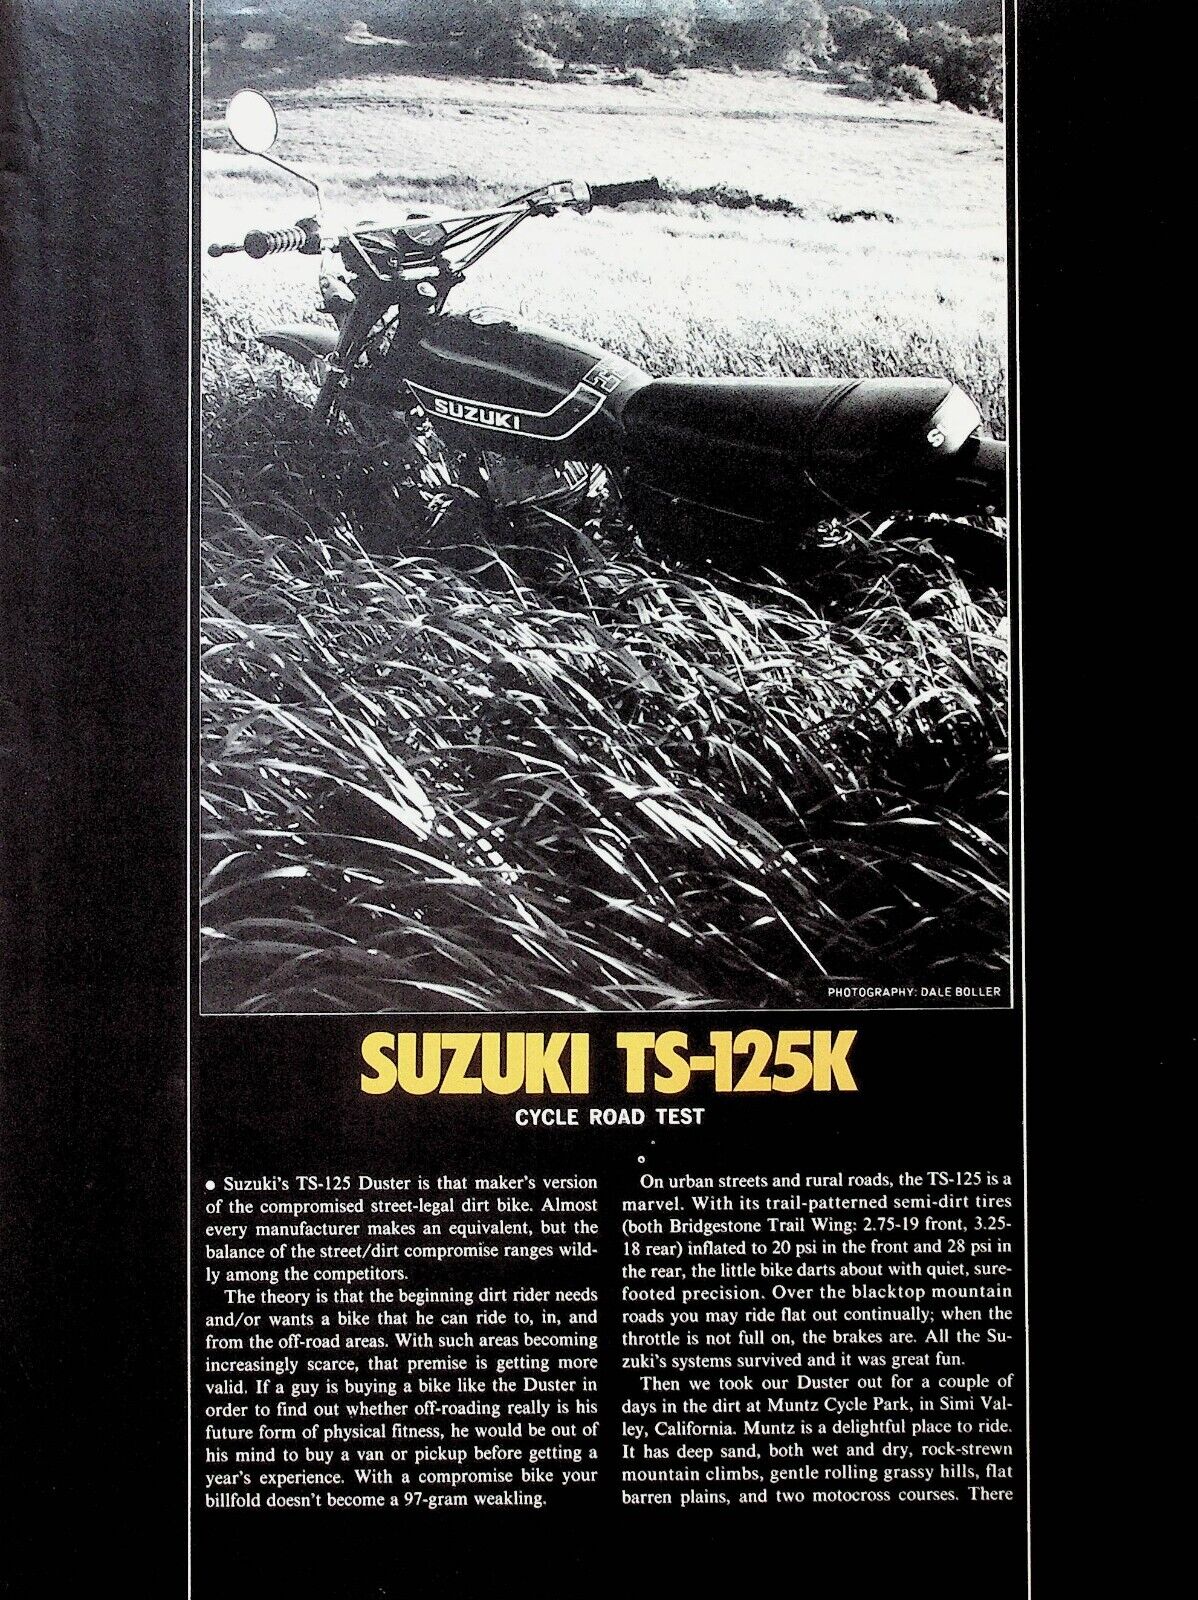 1973 Suzuki TS125K - 4-Page Vintage Motorcycle Road Test Article